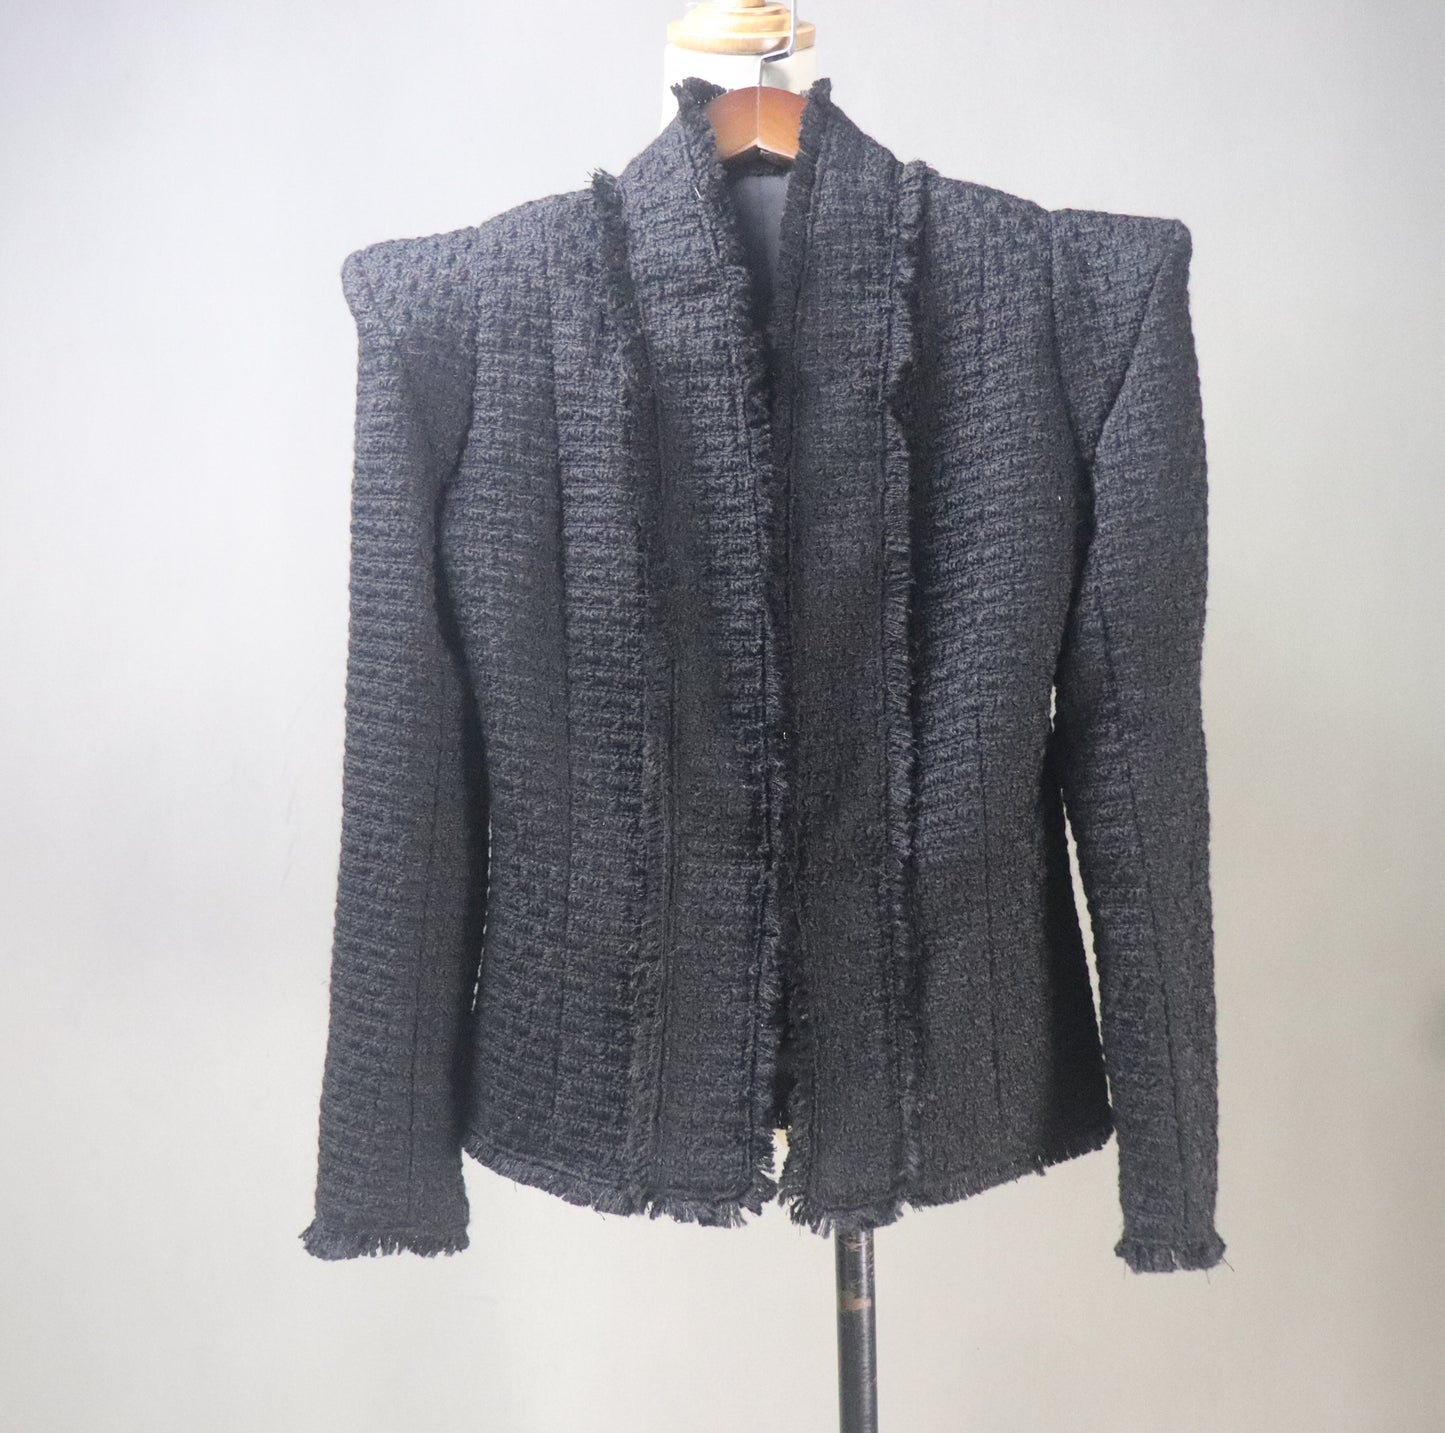 Black Tweed Jacket With High Wide Shoulder